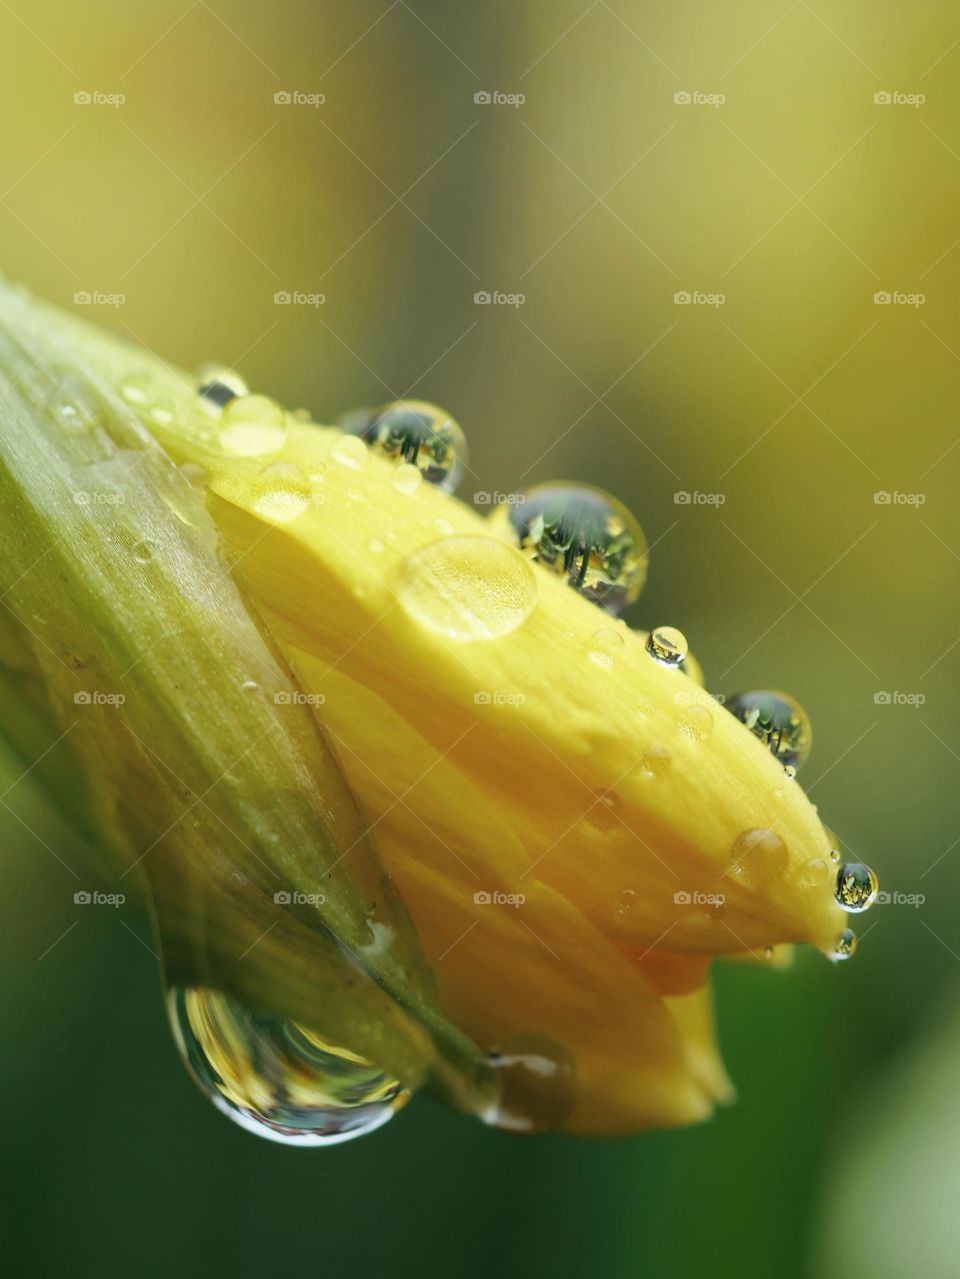 Raindrops on daffodil bud